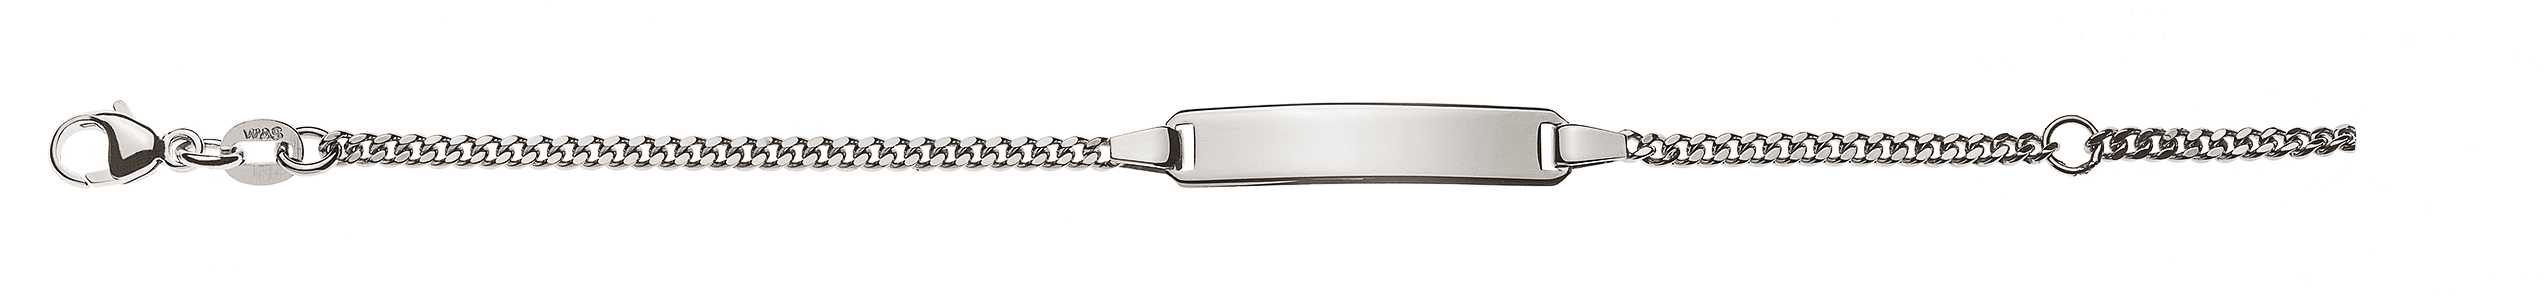 AURONOS Style ID-Bracelet 9k white gold curb chain polished 18cm